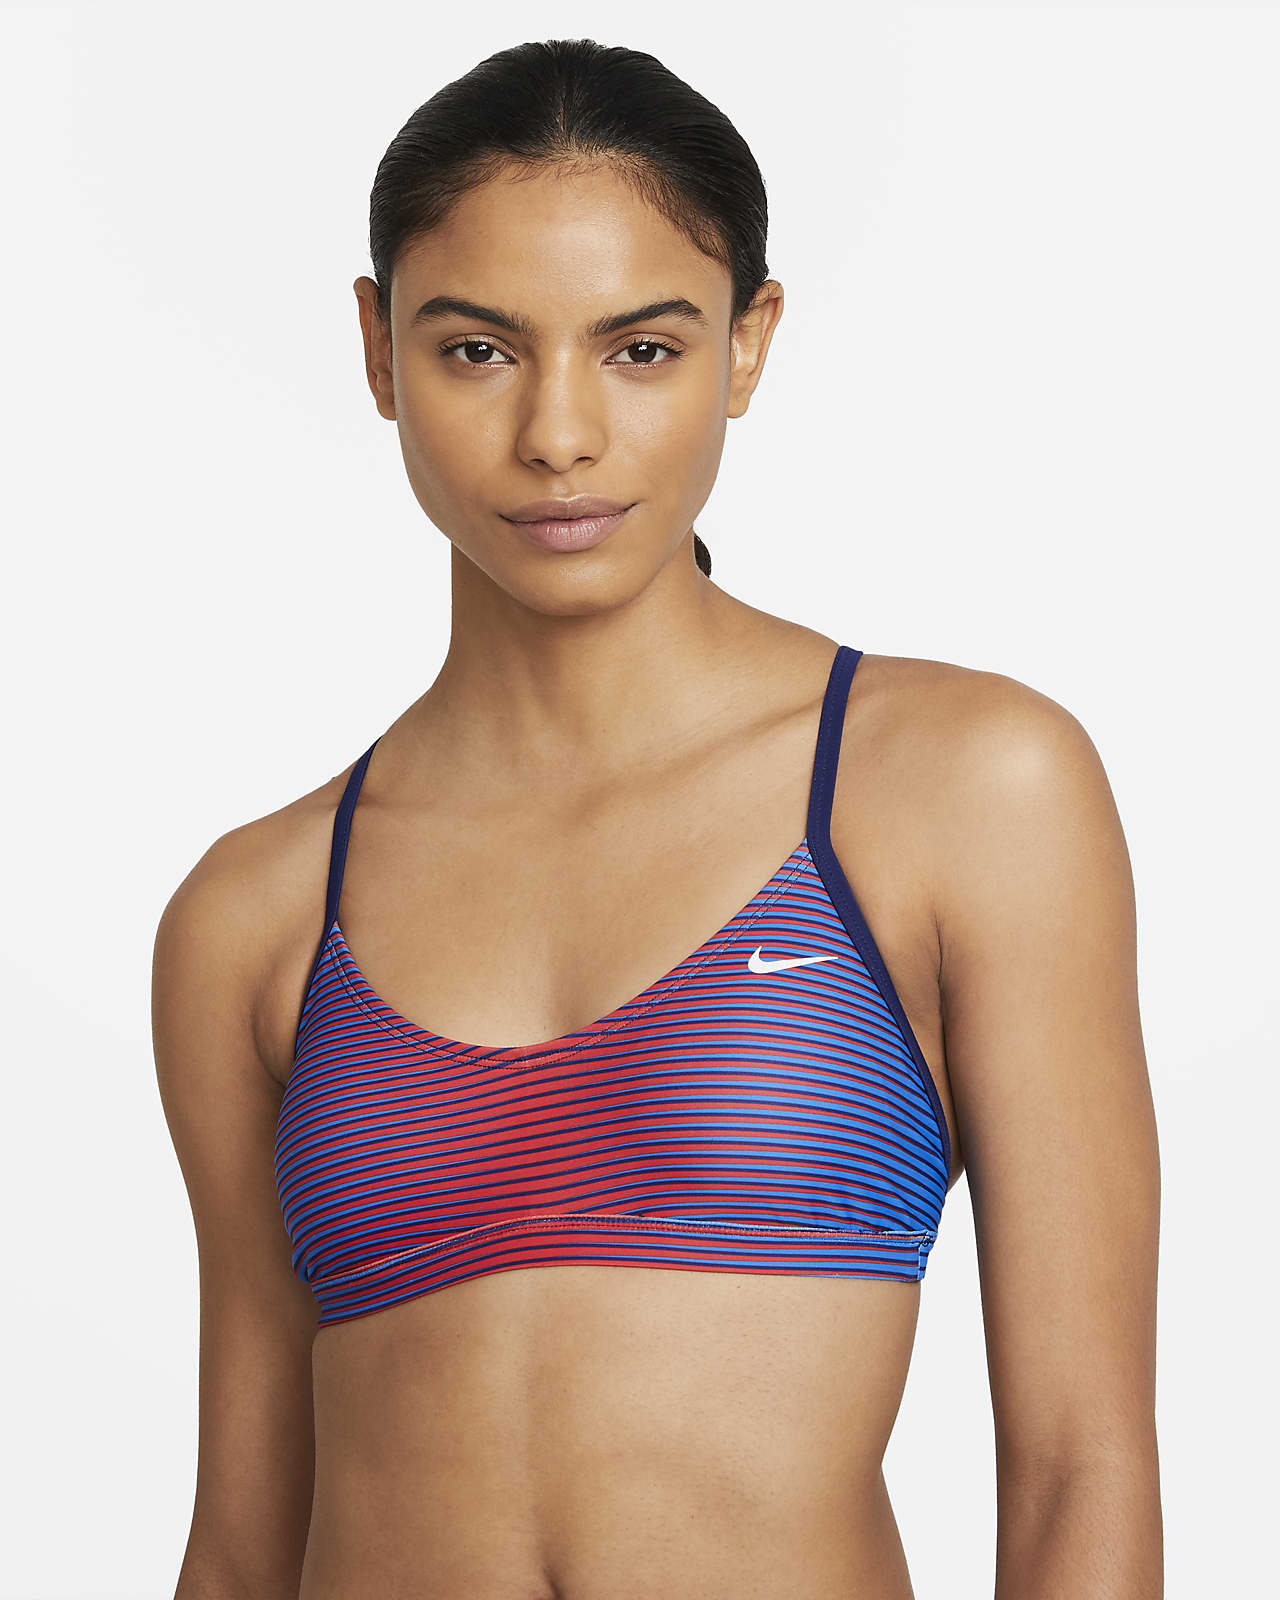 Nike Charge Women's Tri-Back Bikini Top